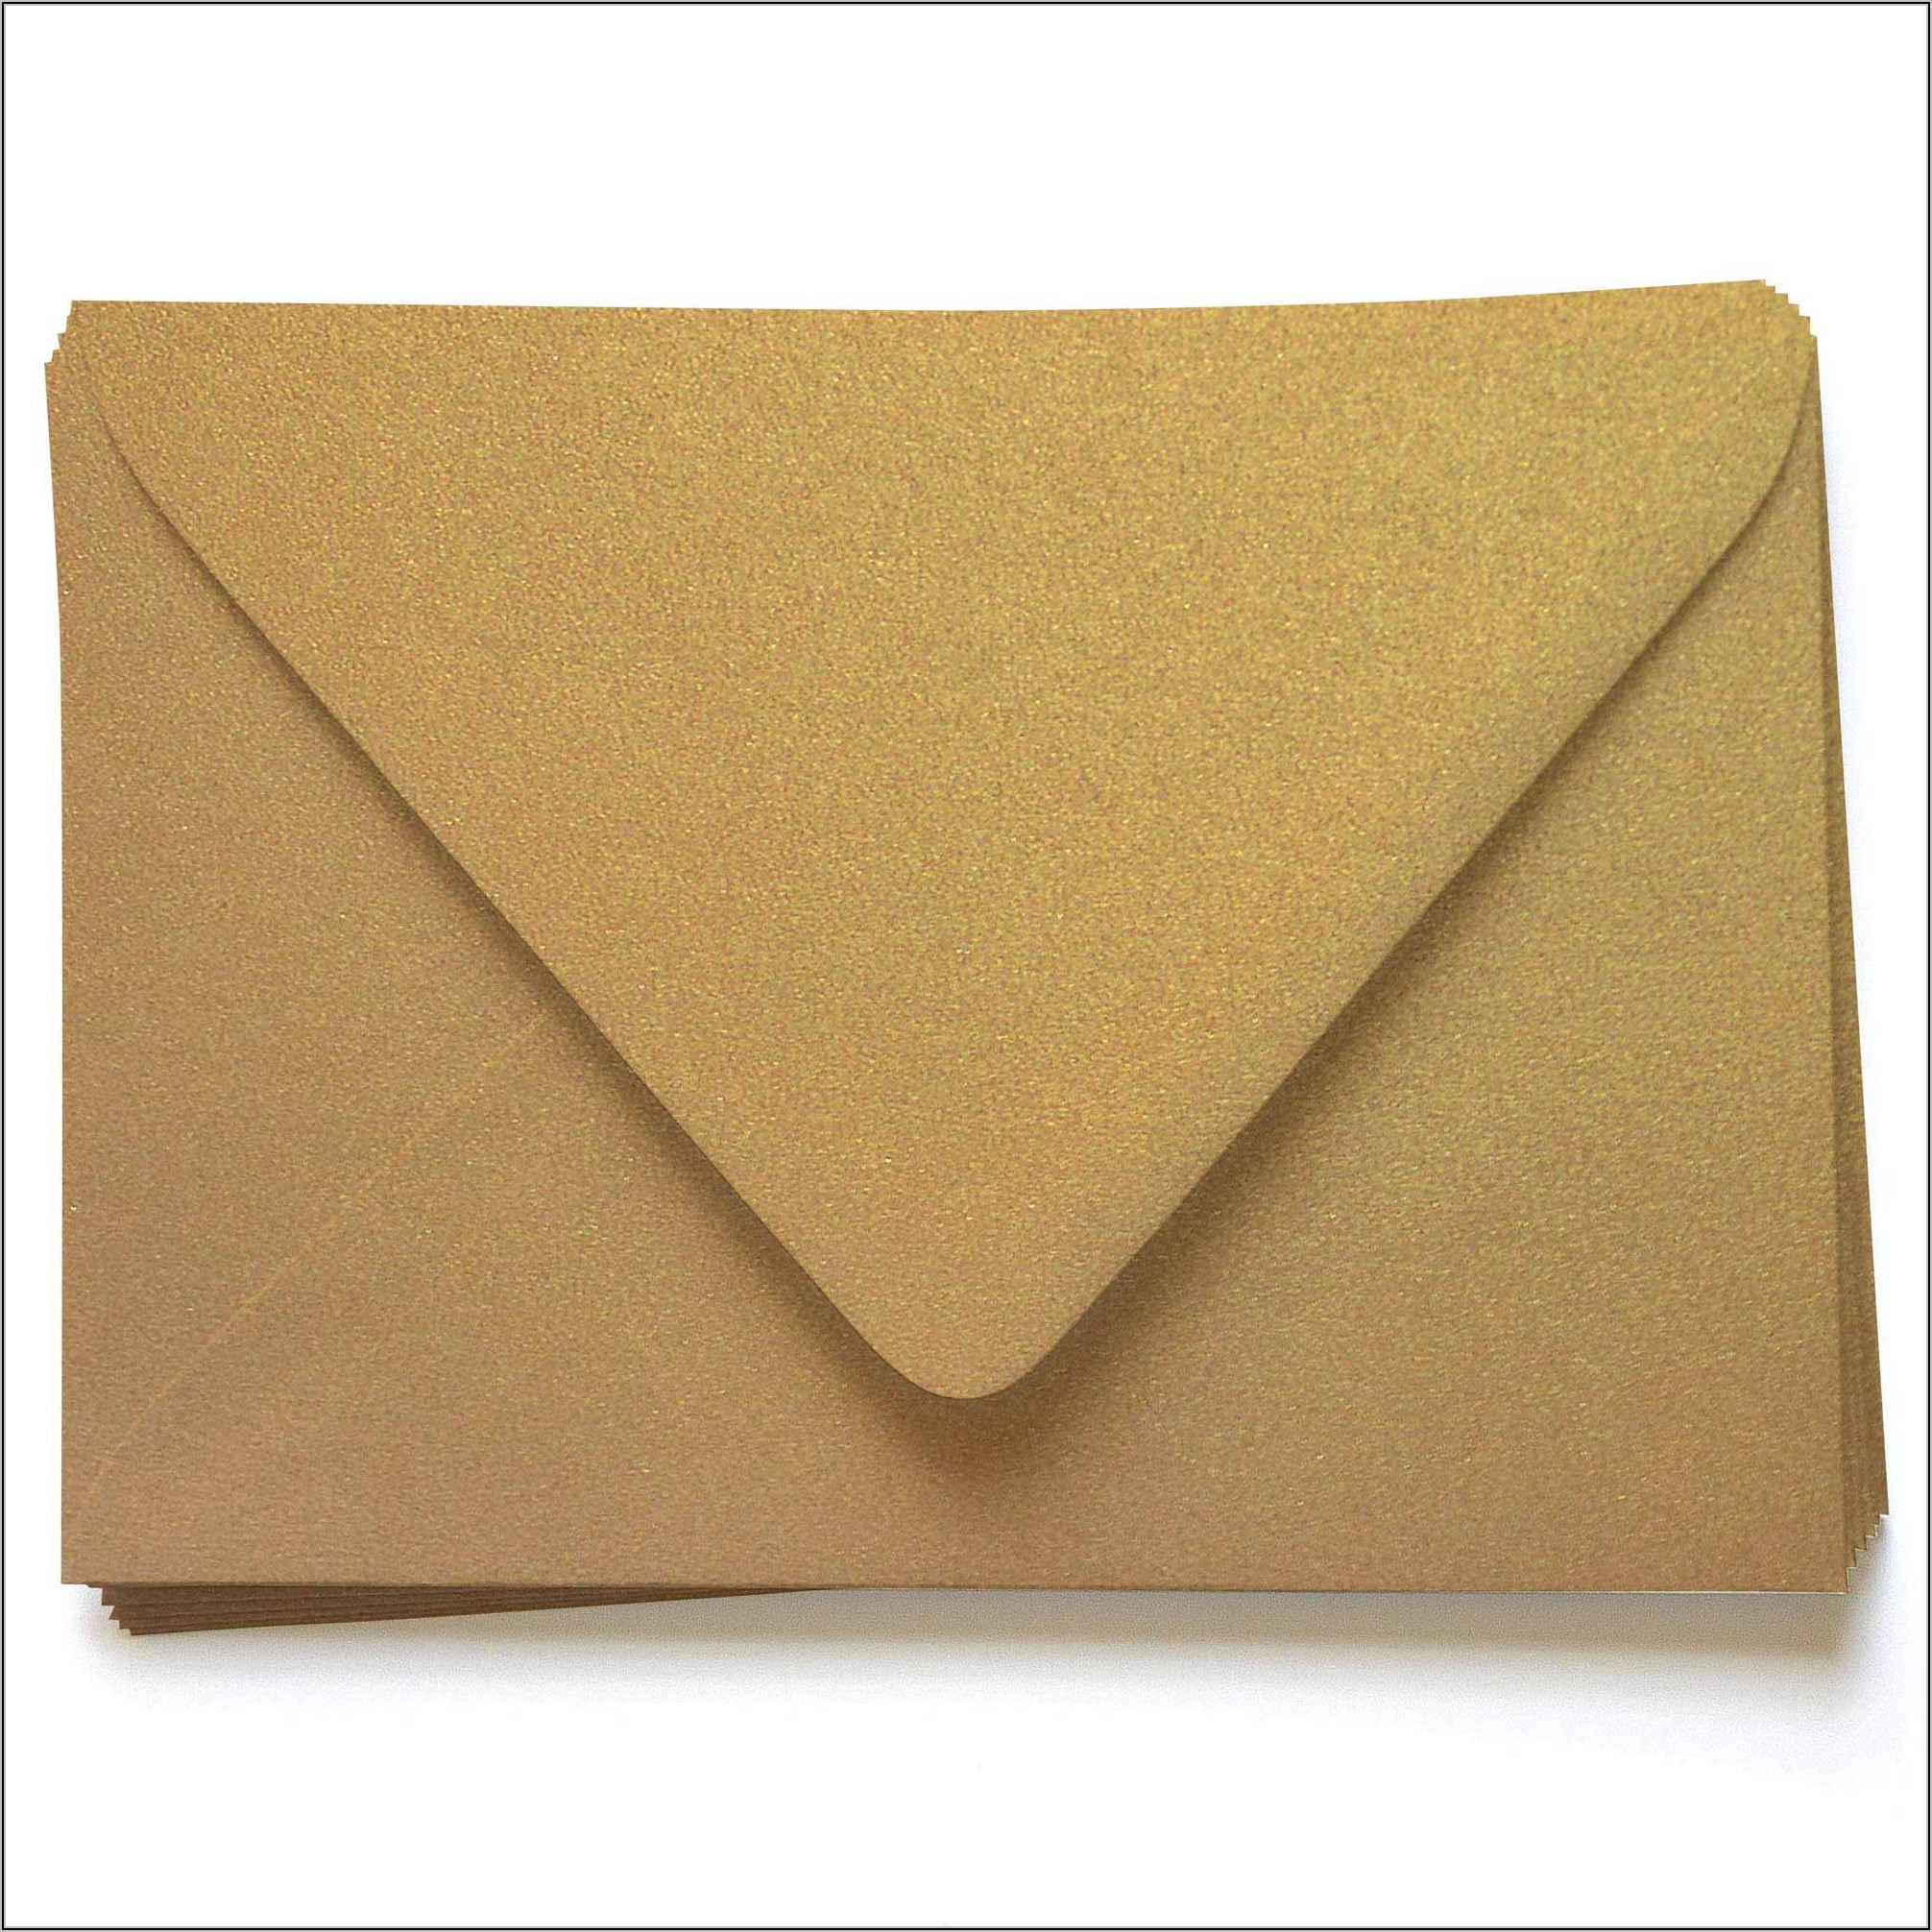 5 14 X 7 14 Envelopes